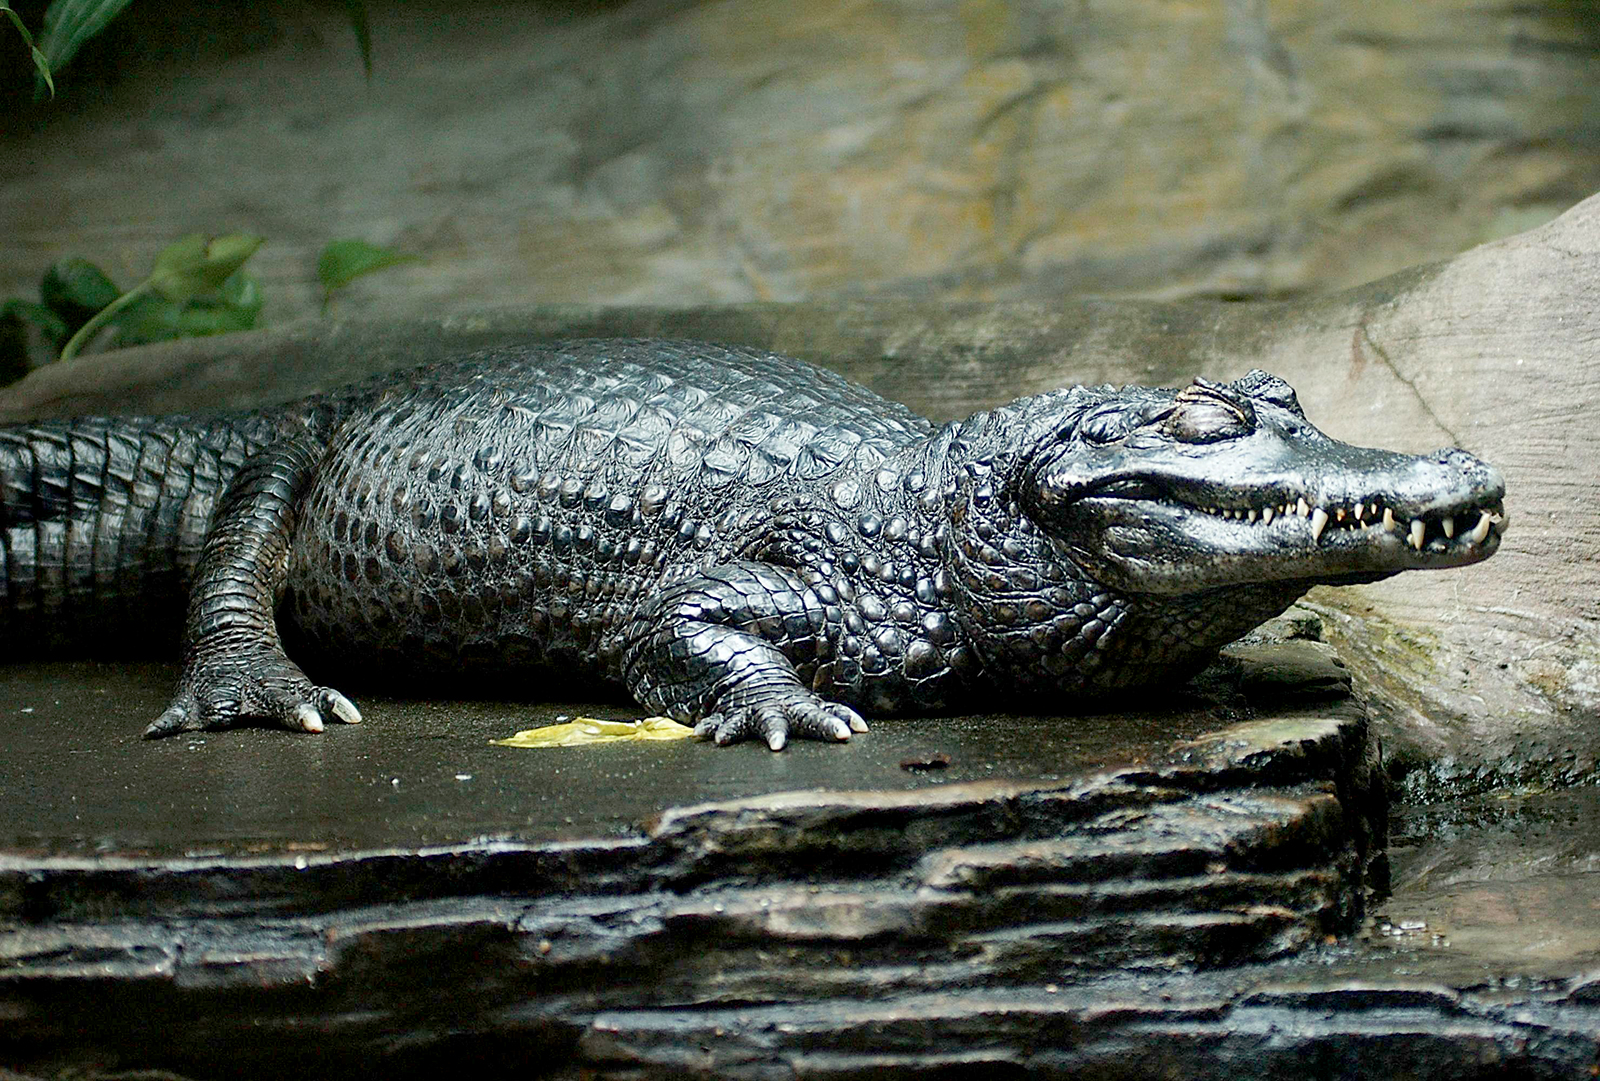 Black Alligator